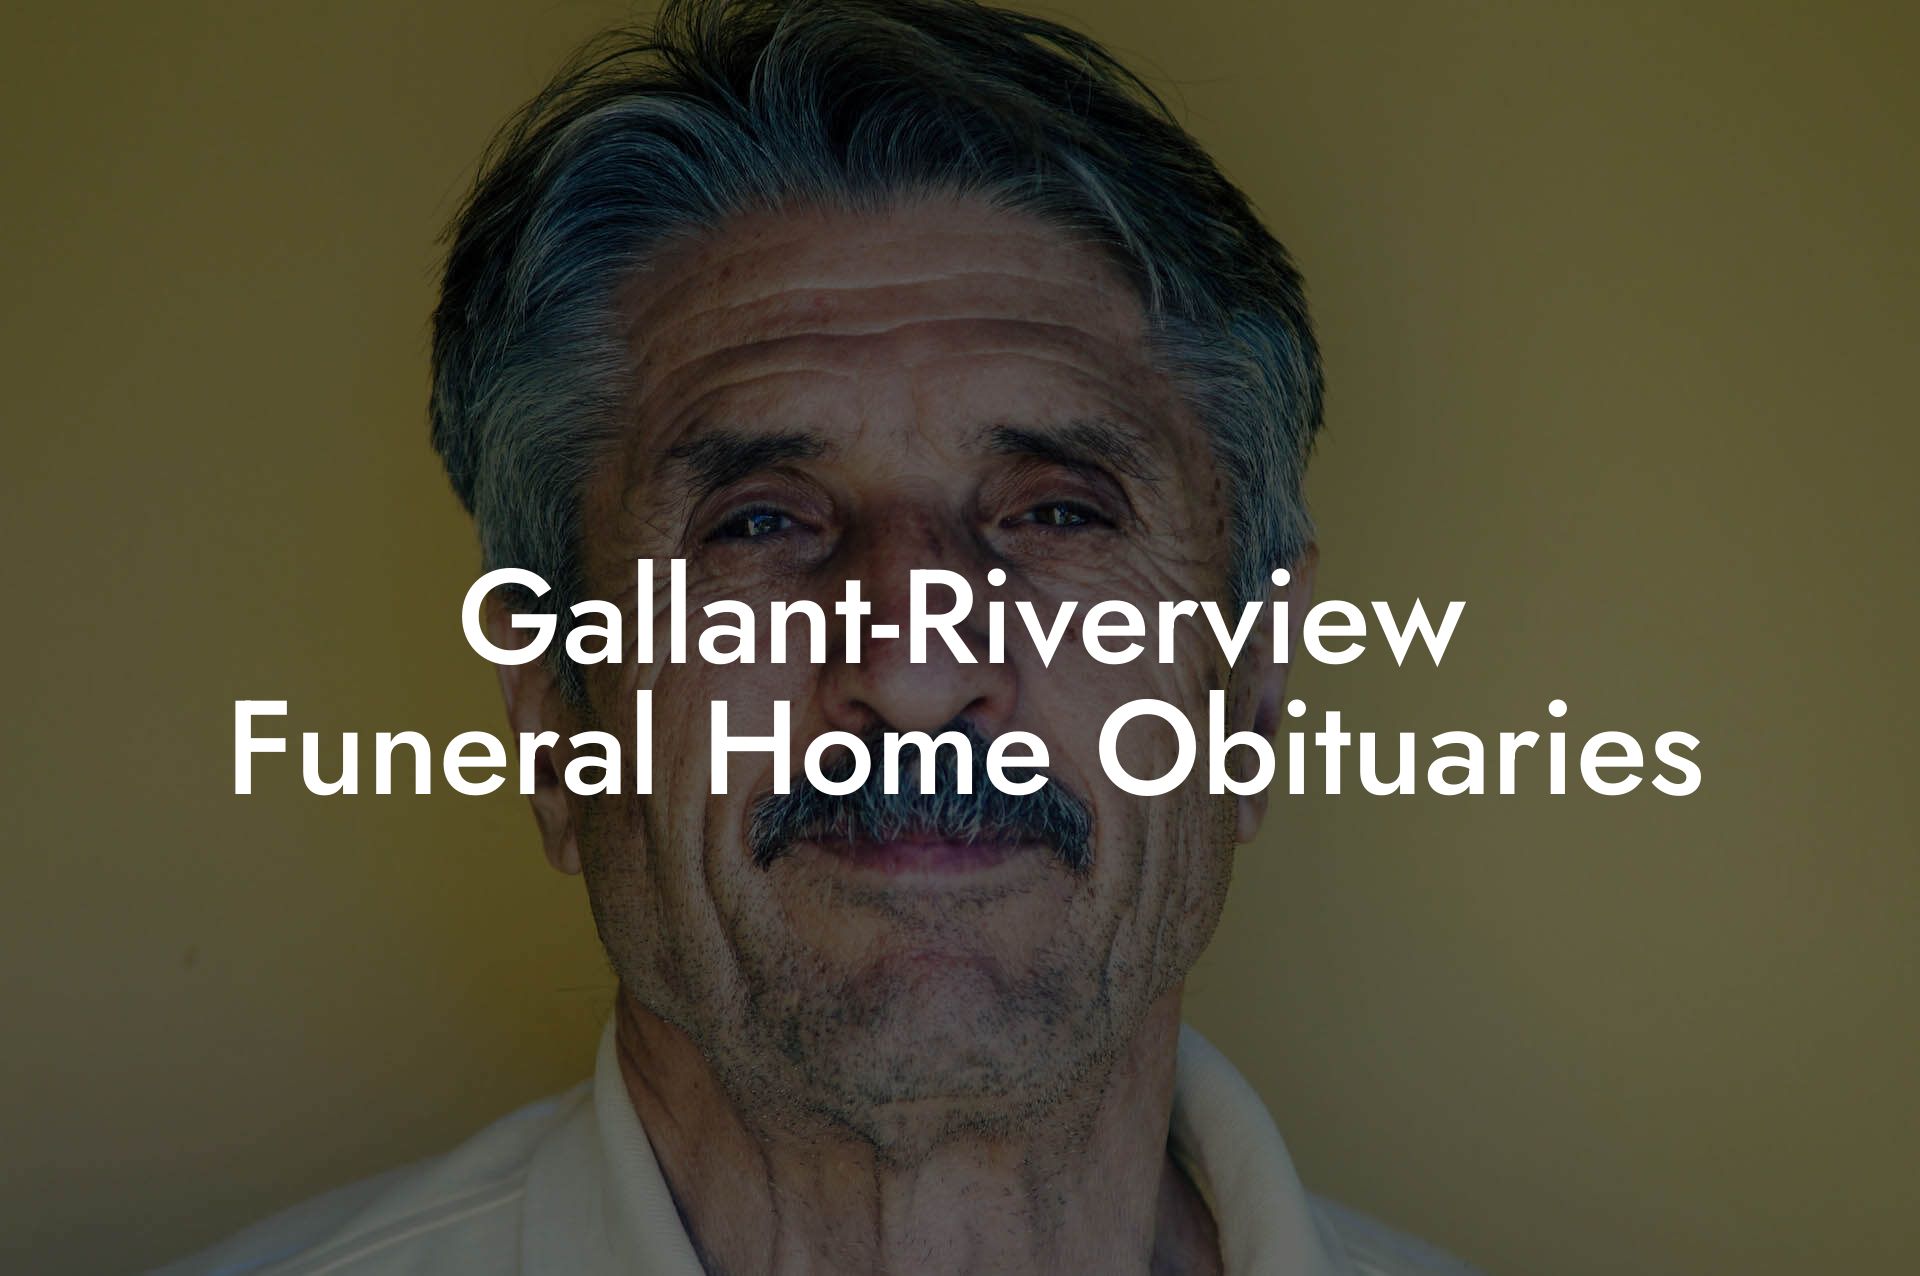 Gallant-Riverview Funeral Home Obituaries